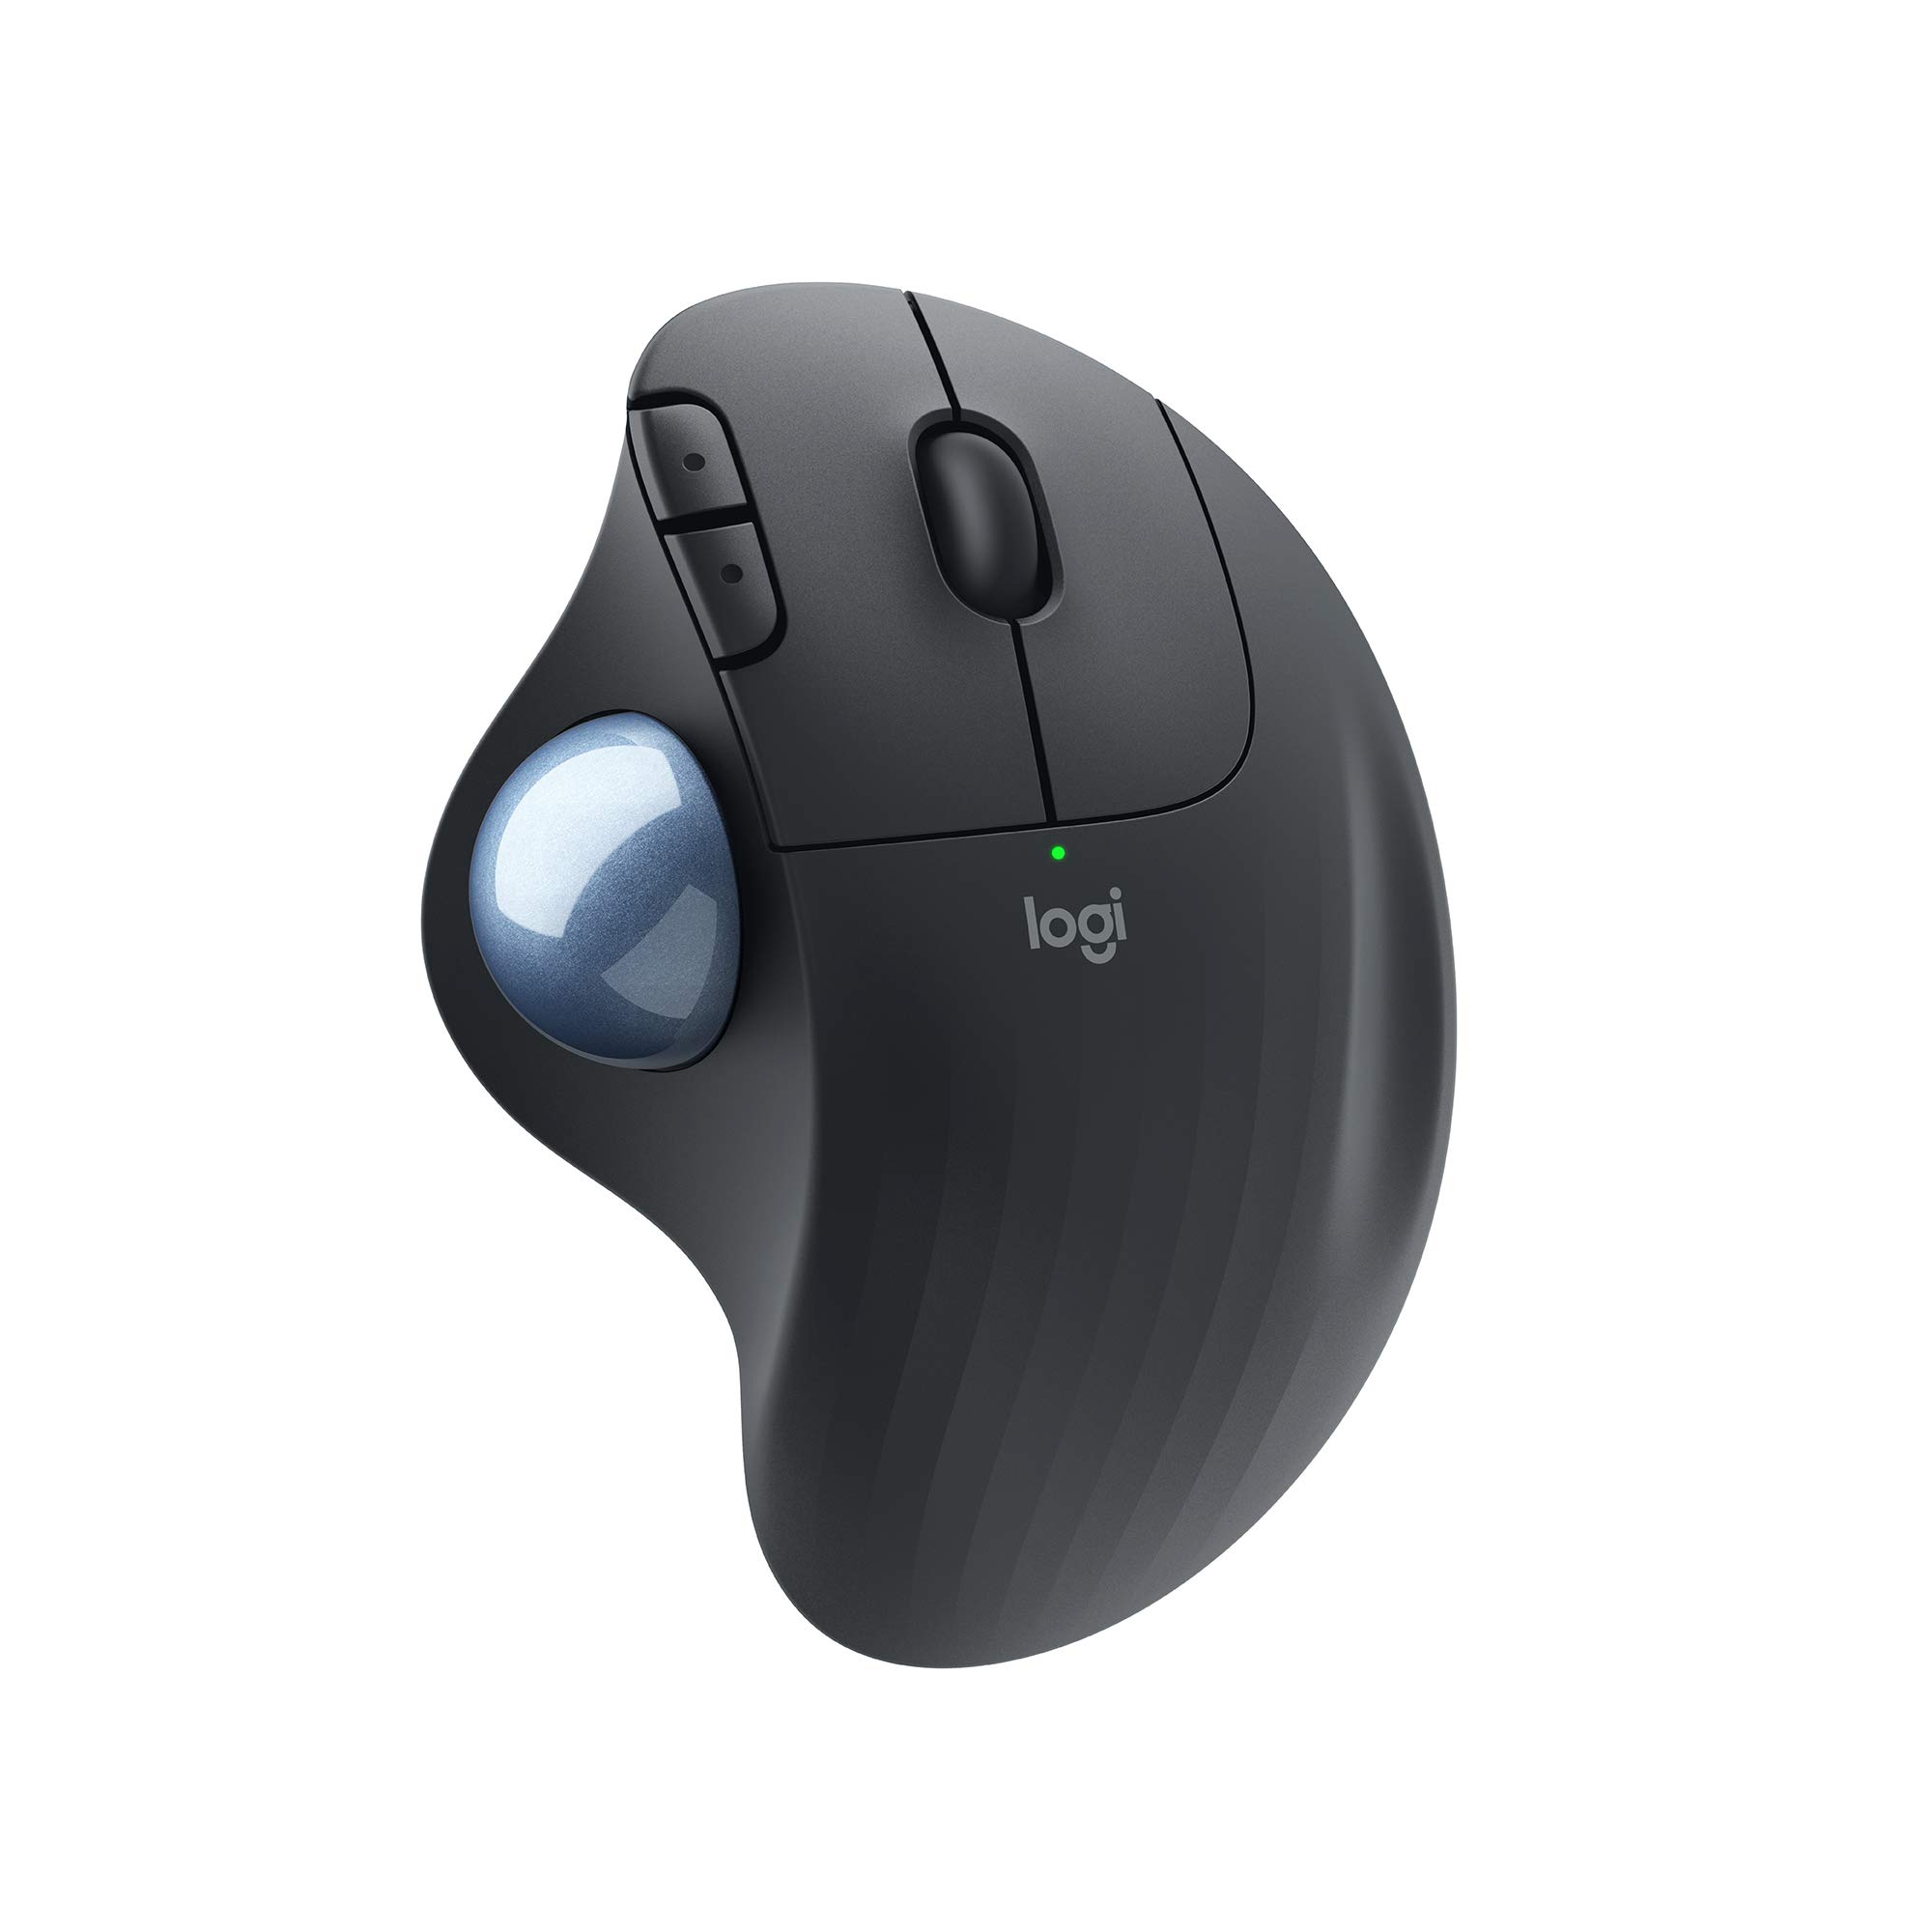 $34.99 Logitech ERGO M575 Wireless Trackball Mouse, Black At Office Depot.